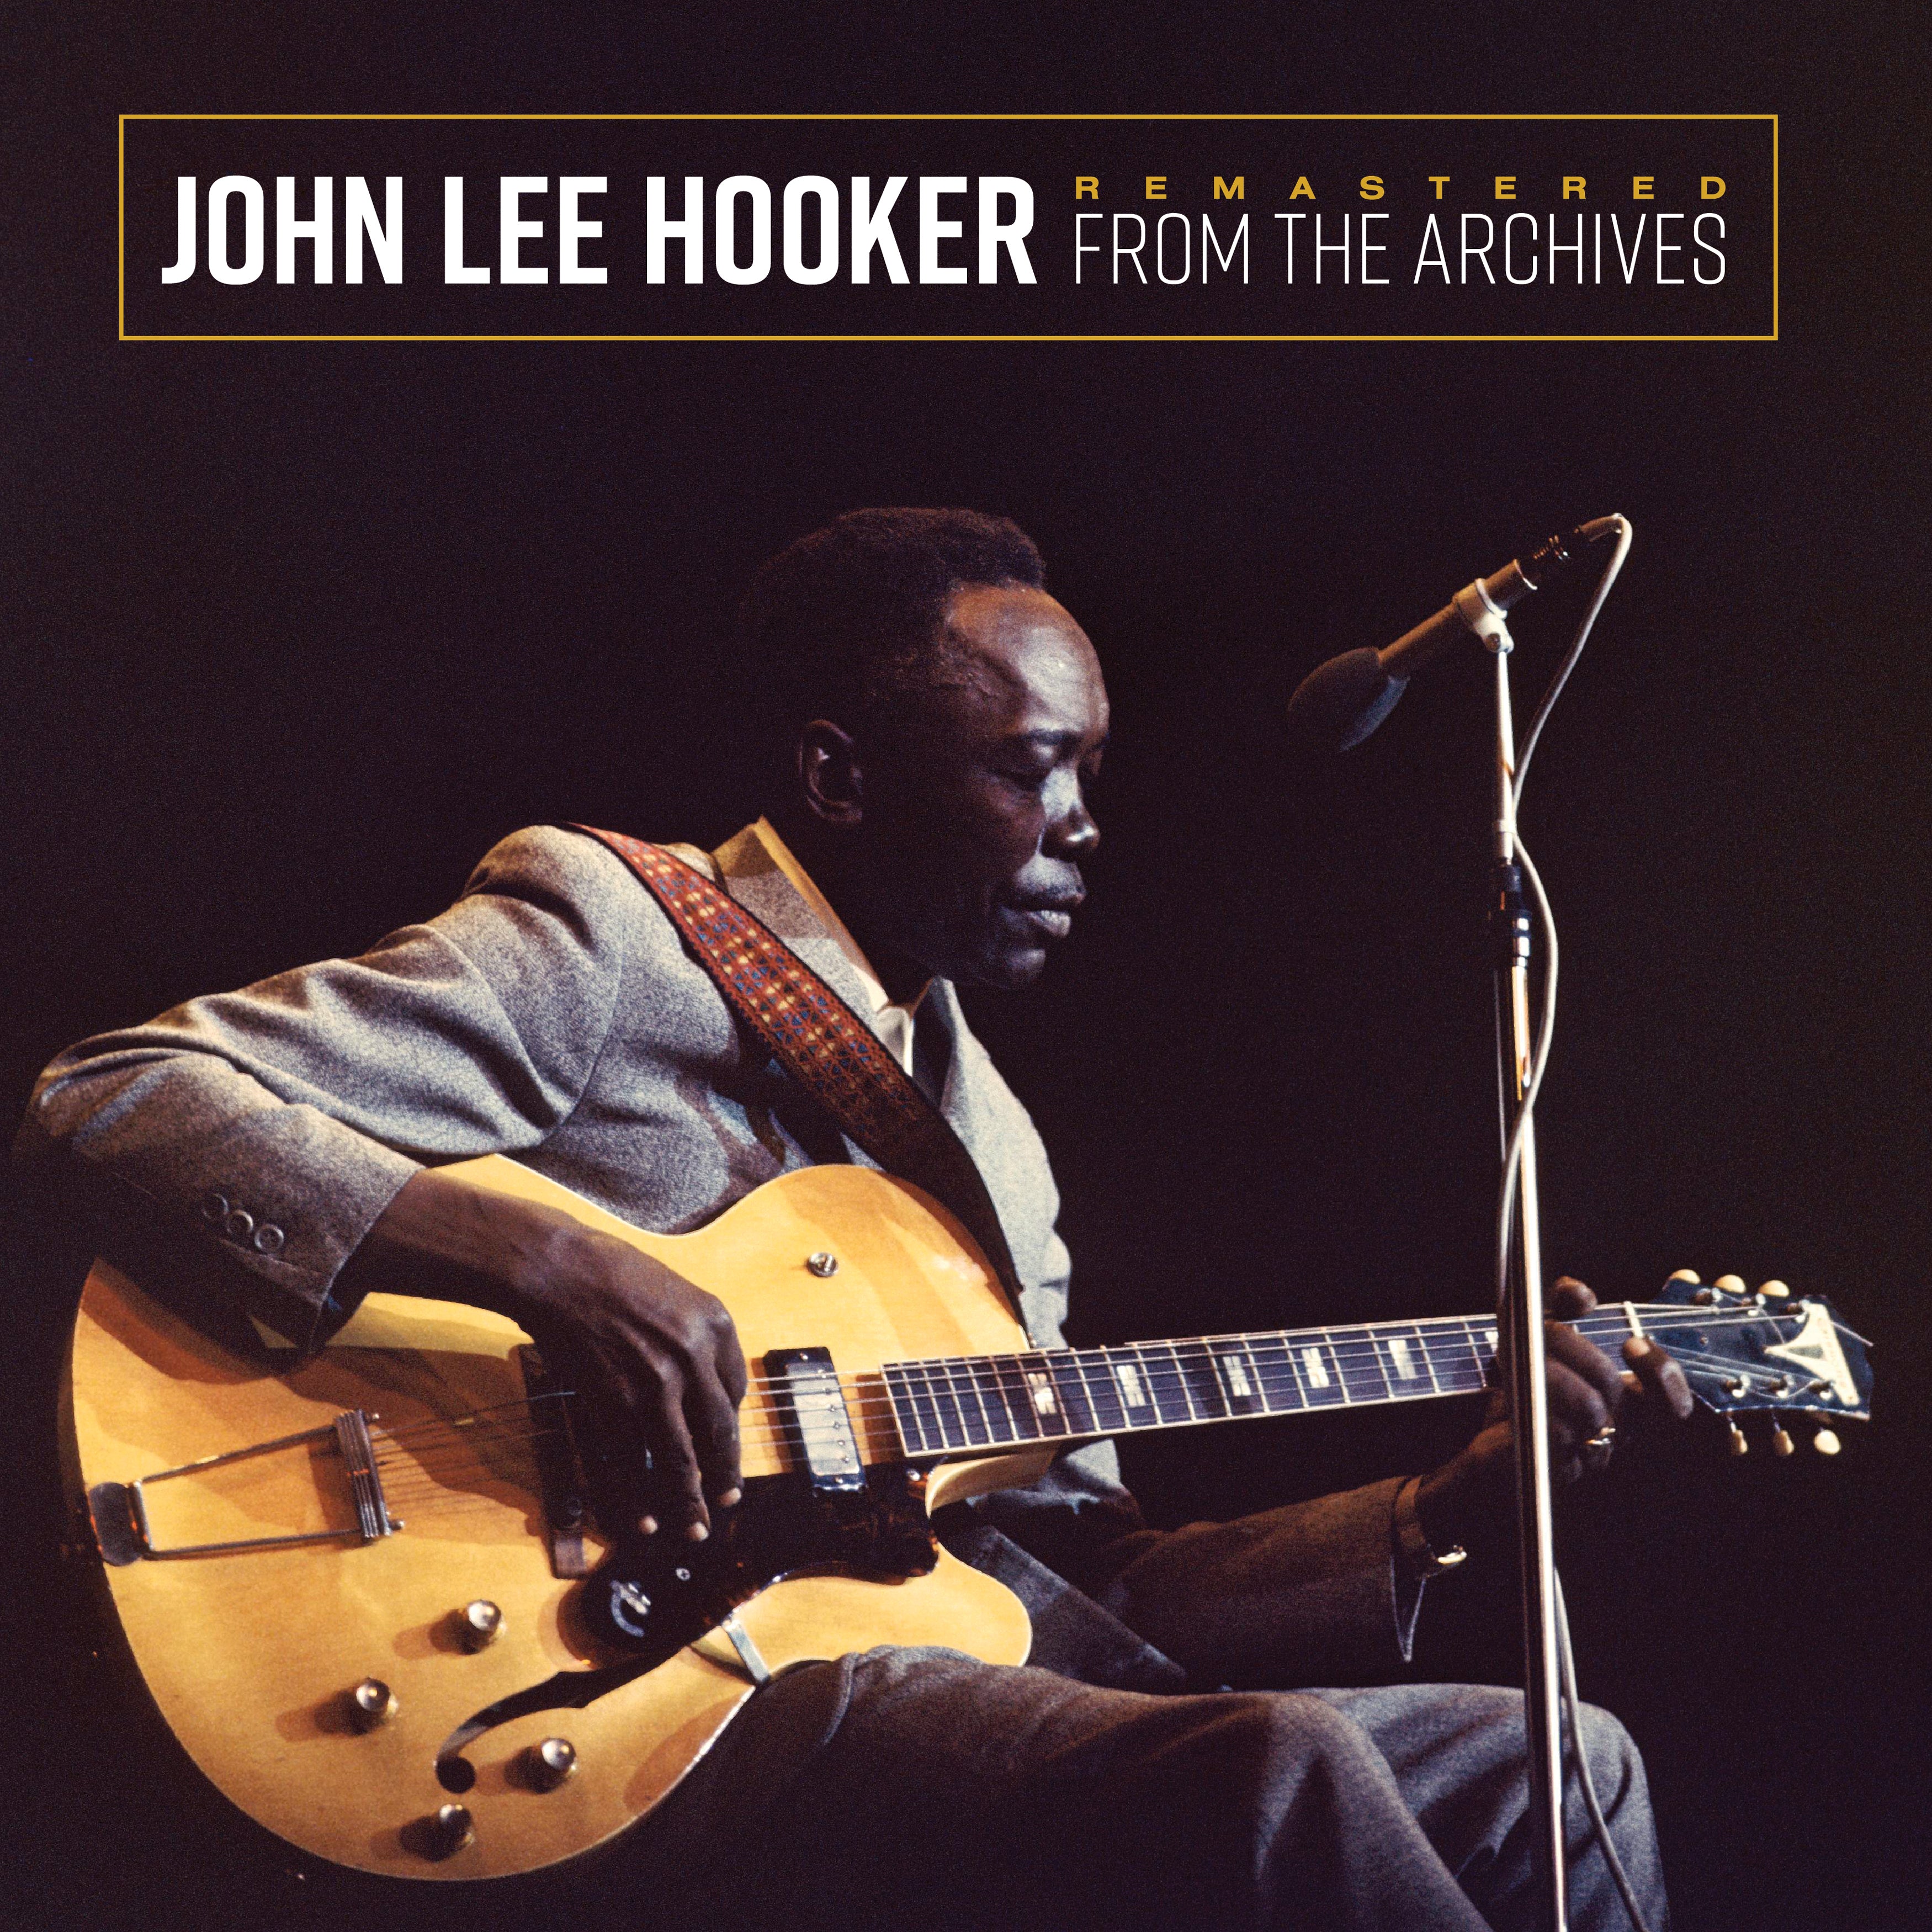 John Lee Hooker | Remastered From The Archives (Metallic Silver & Black Vinyl) | Vinyl